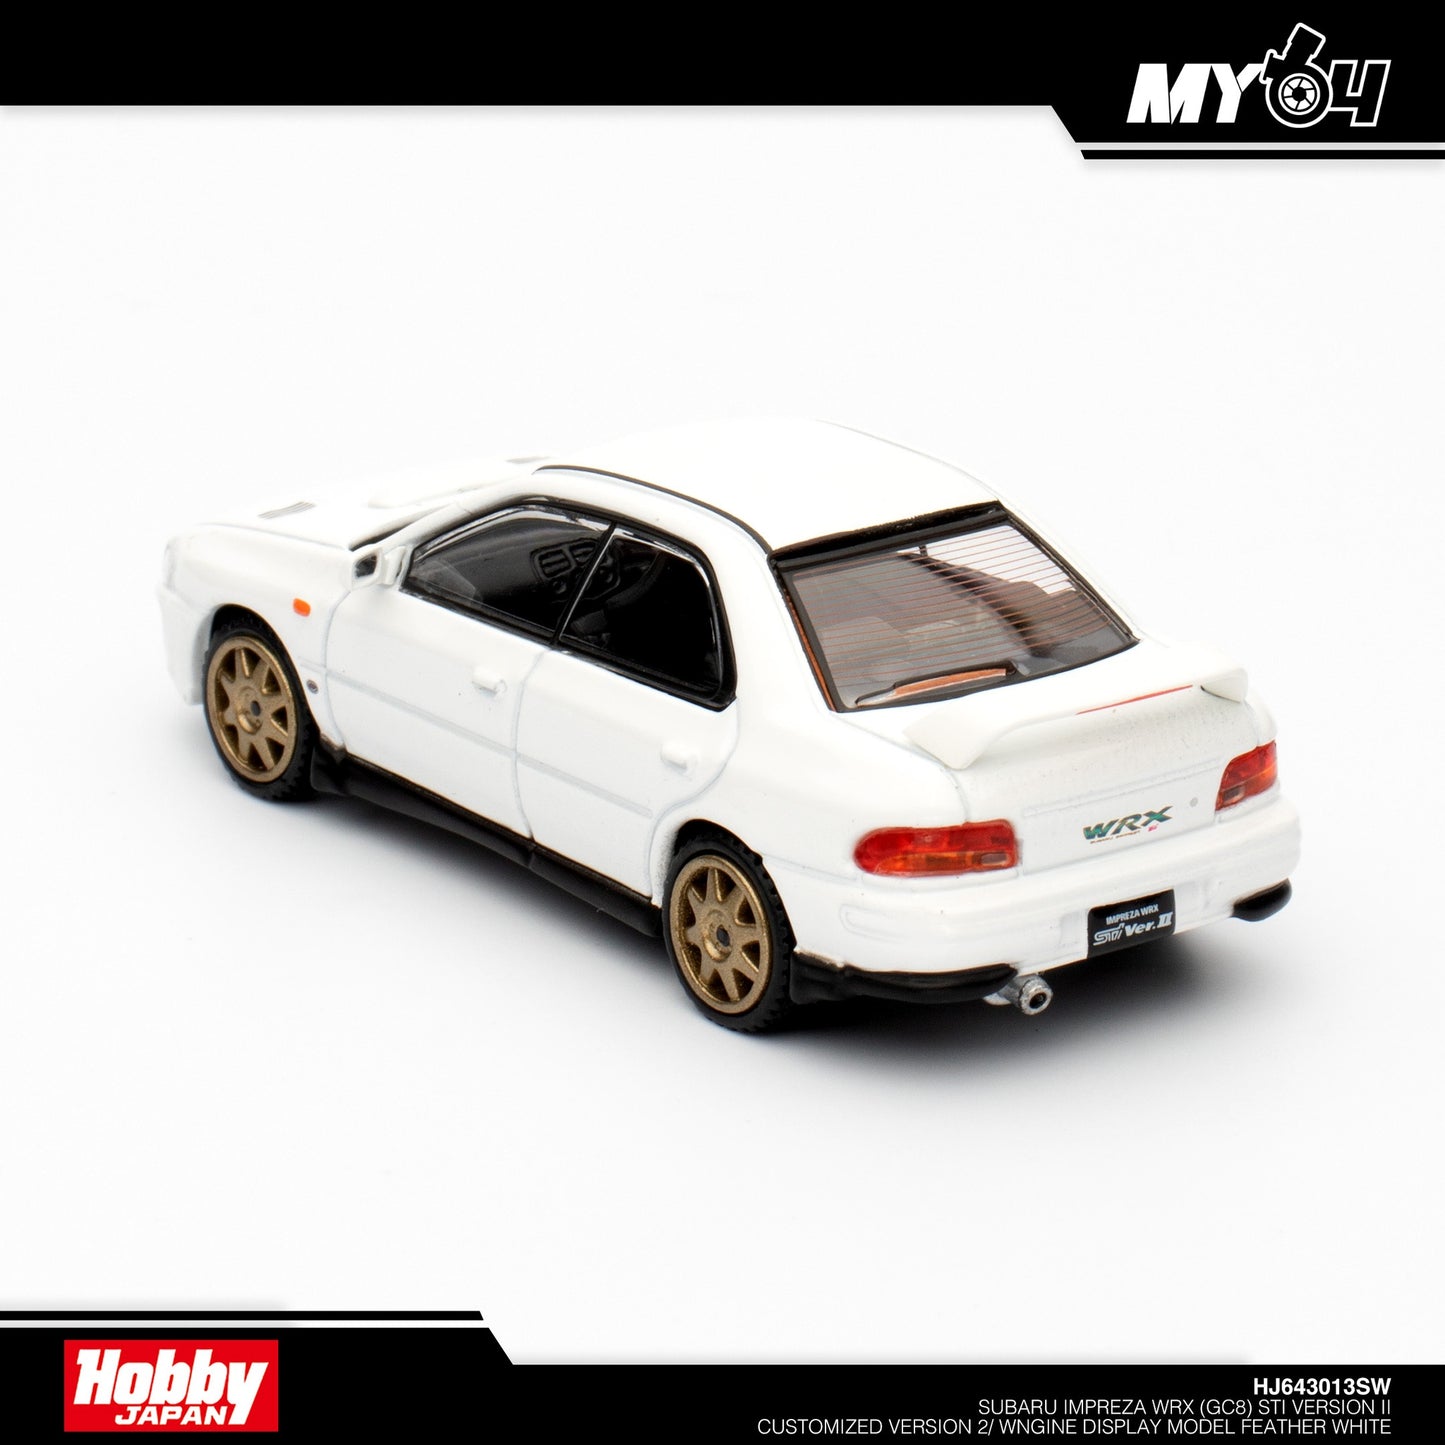 [Hobby Japan] Subaru Impreza WRX (GC8) STI Version II Customized Version w/Engine Display Model